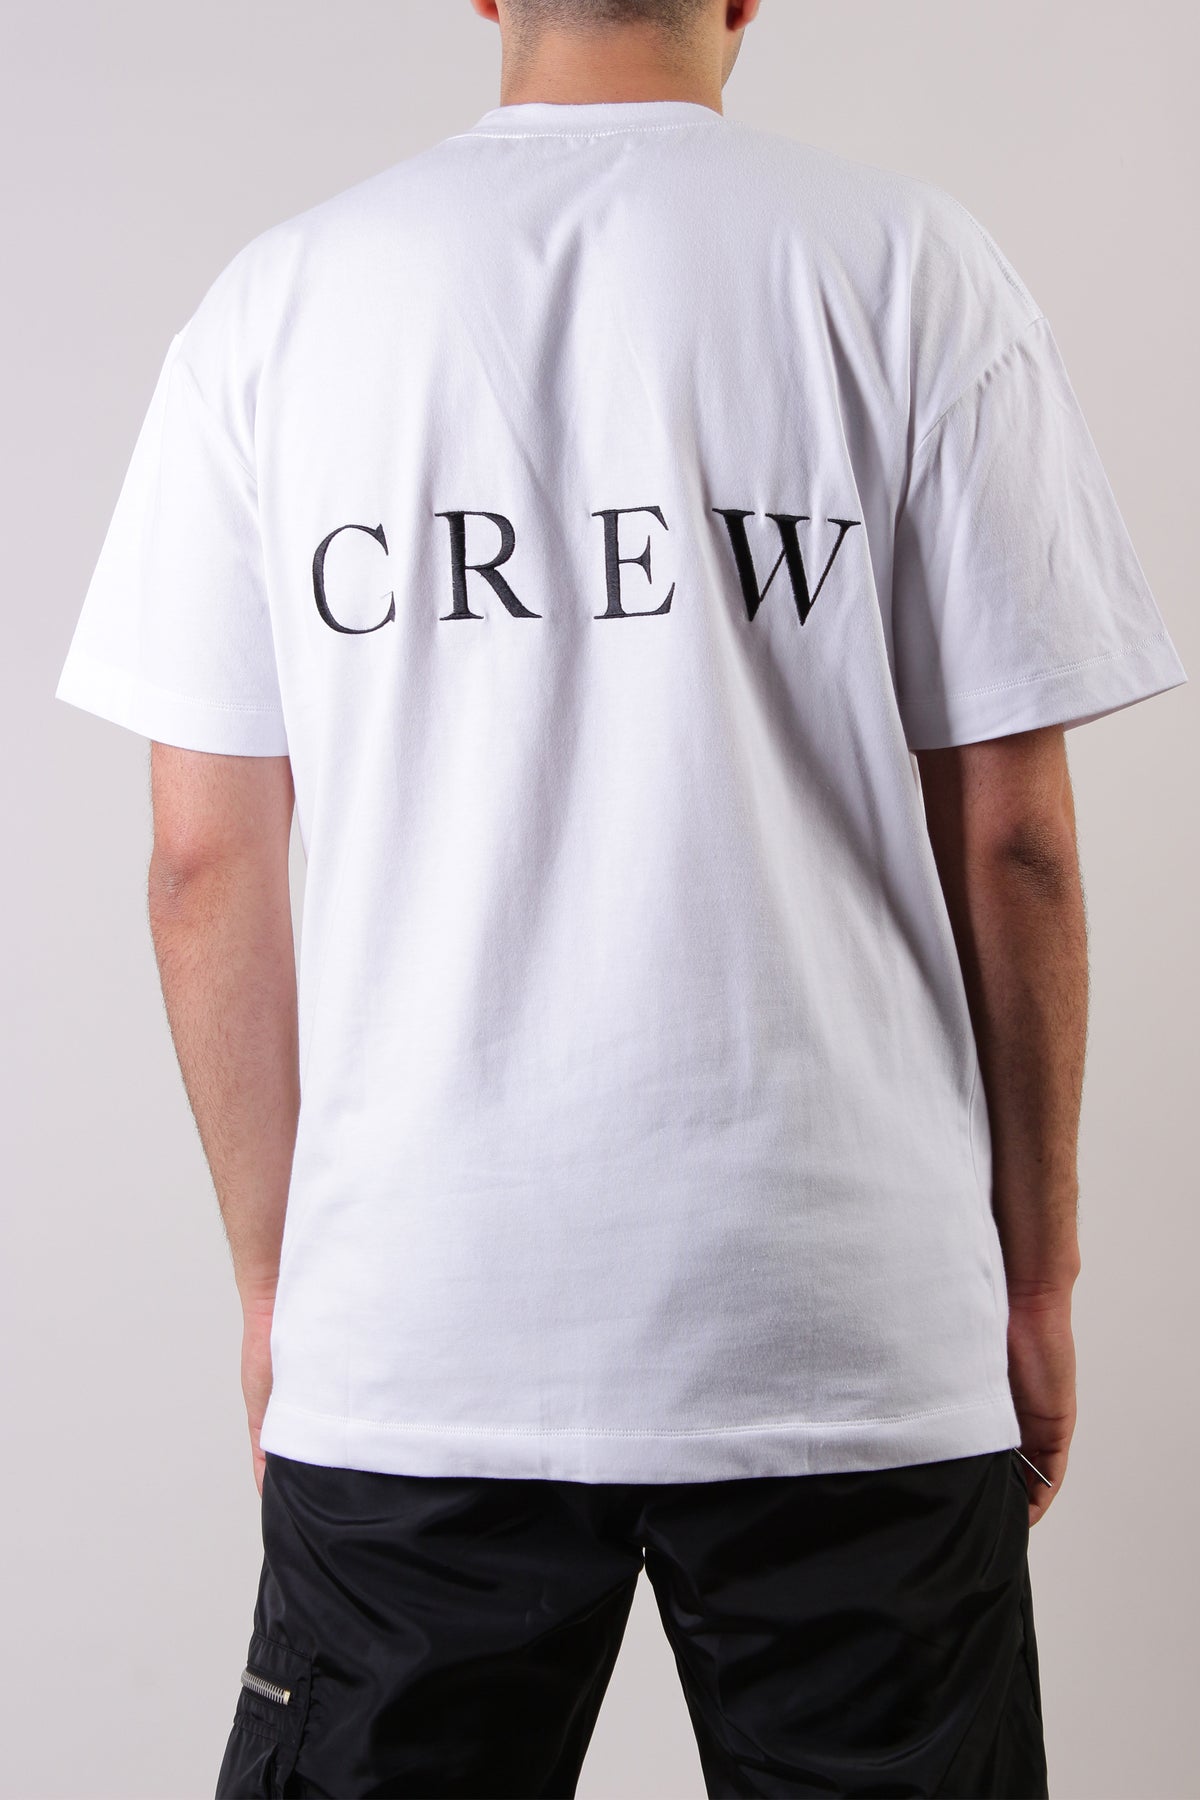 CREW Milano LOS ANGELS White T-Shirt